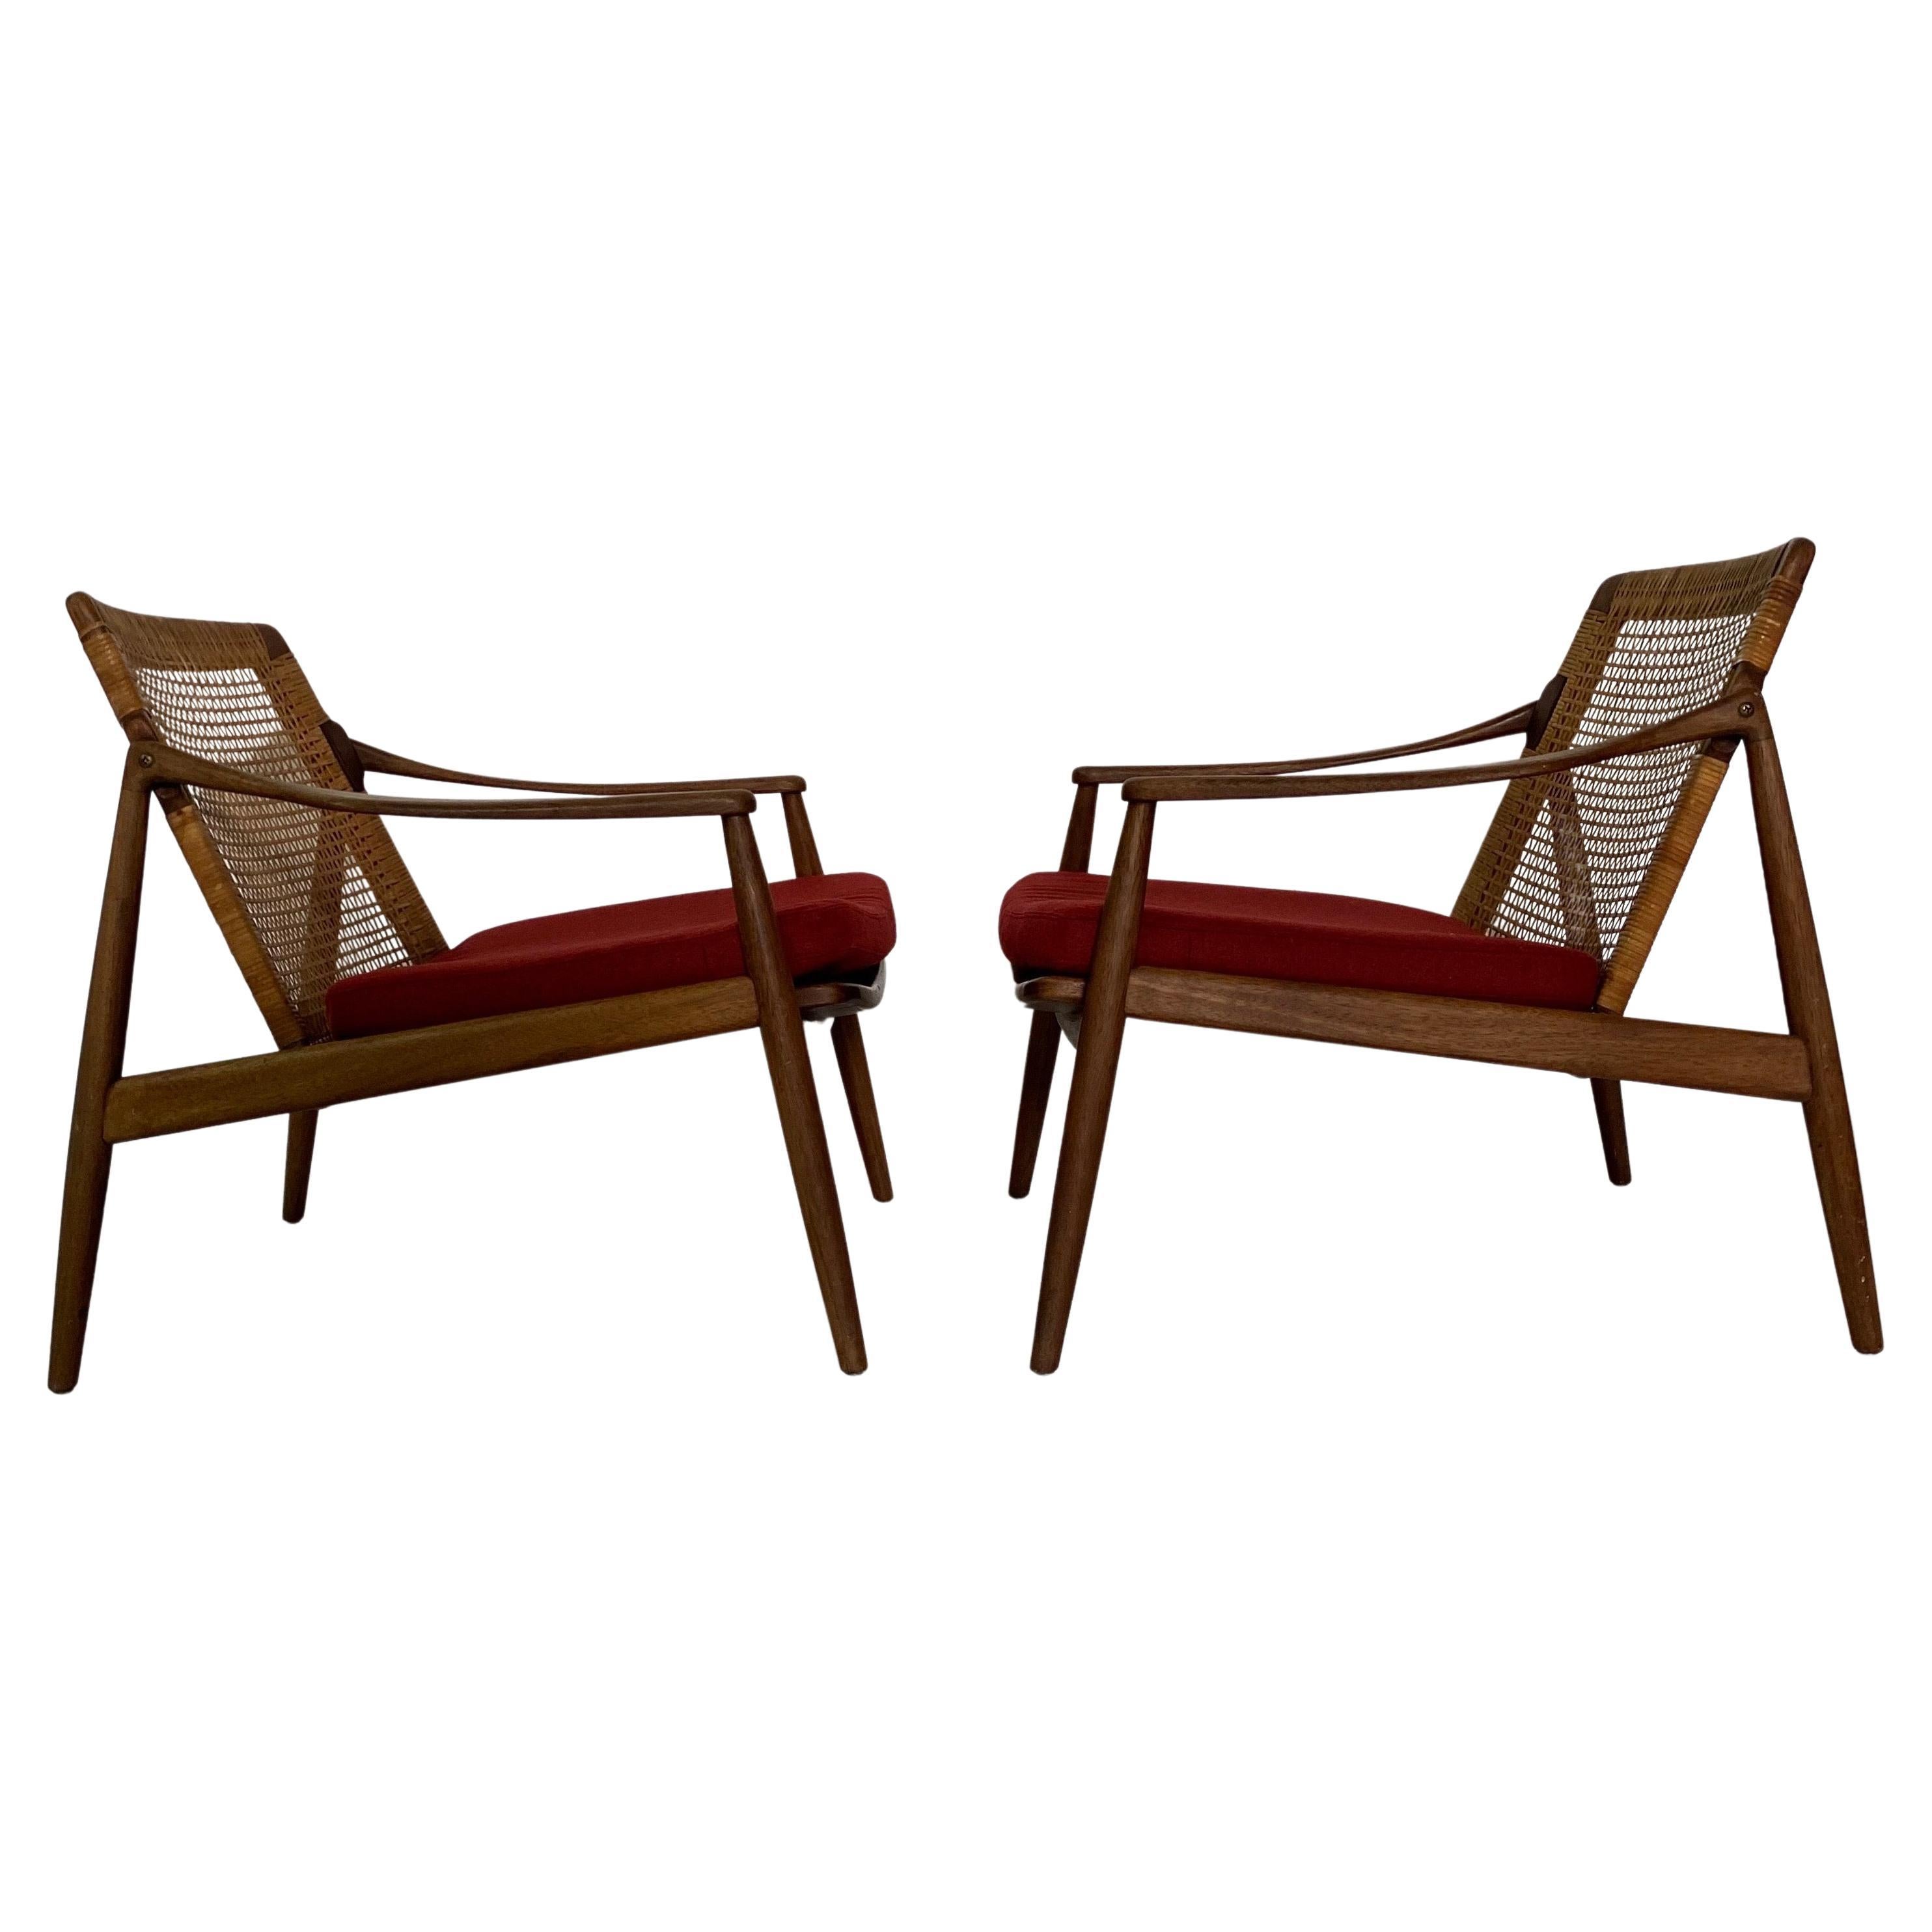 Hartmund Lohmeyer set of Two Teak Lounge Chairs, "Model 400" 1950s, Germany